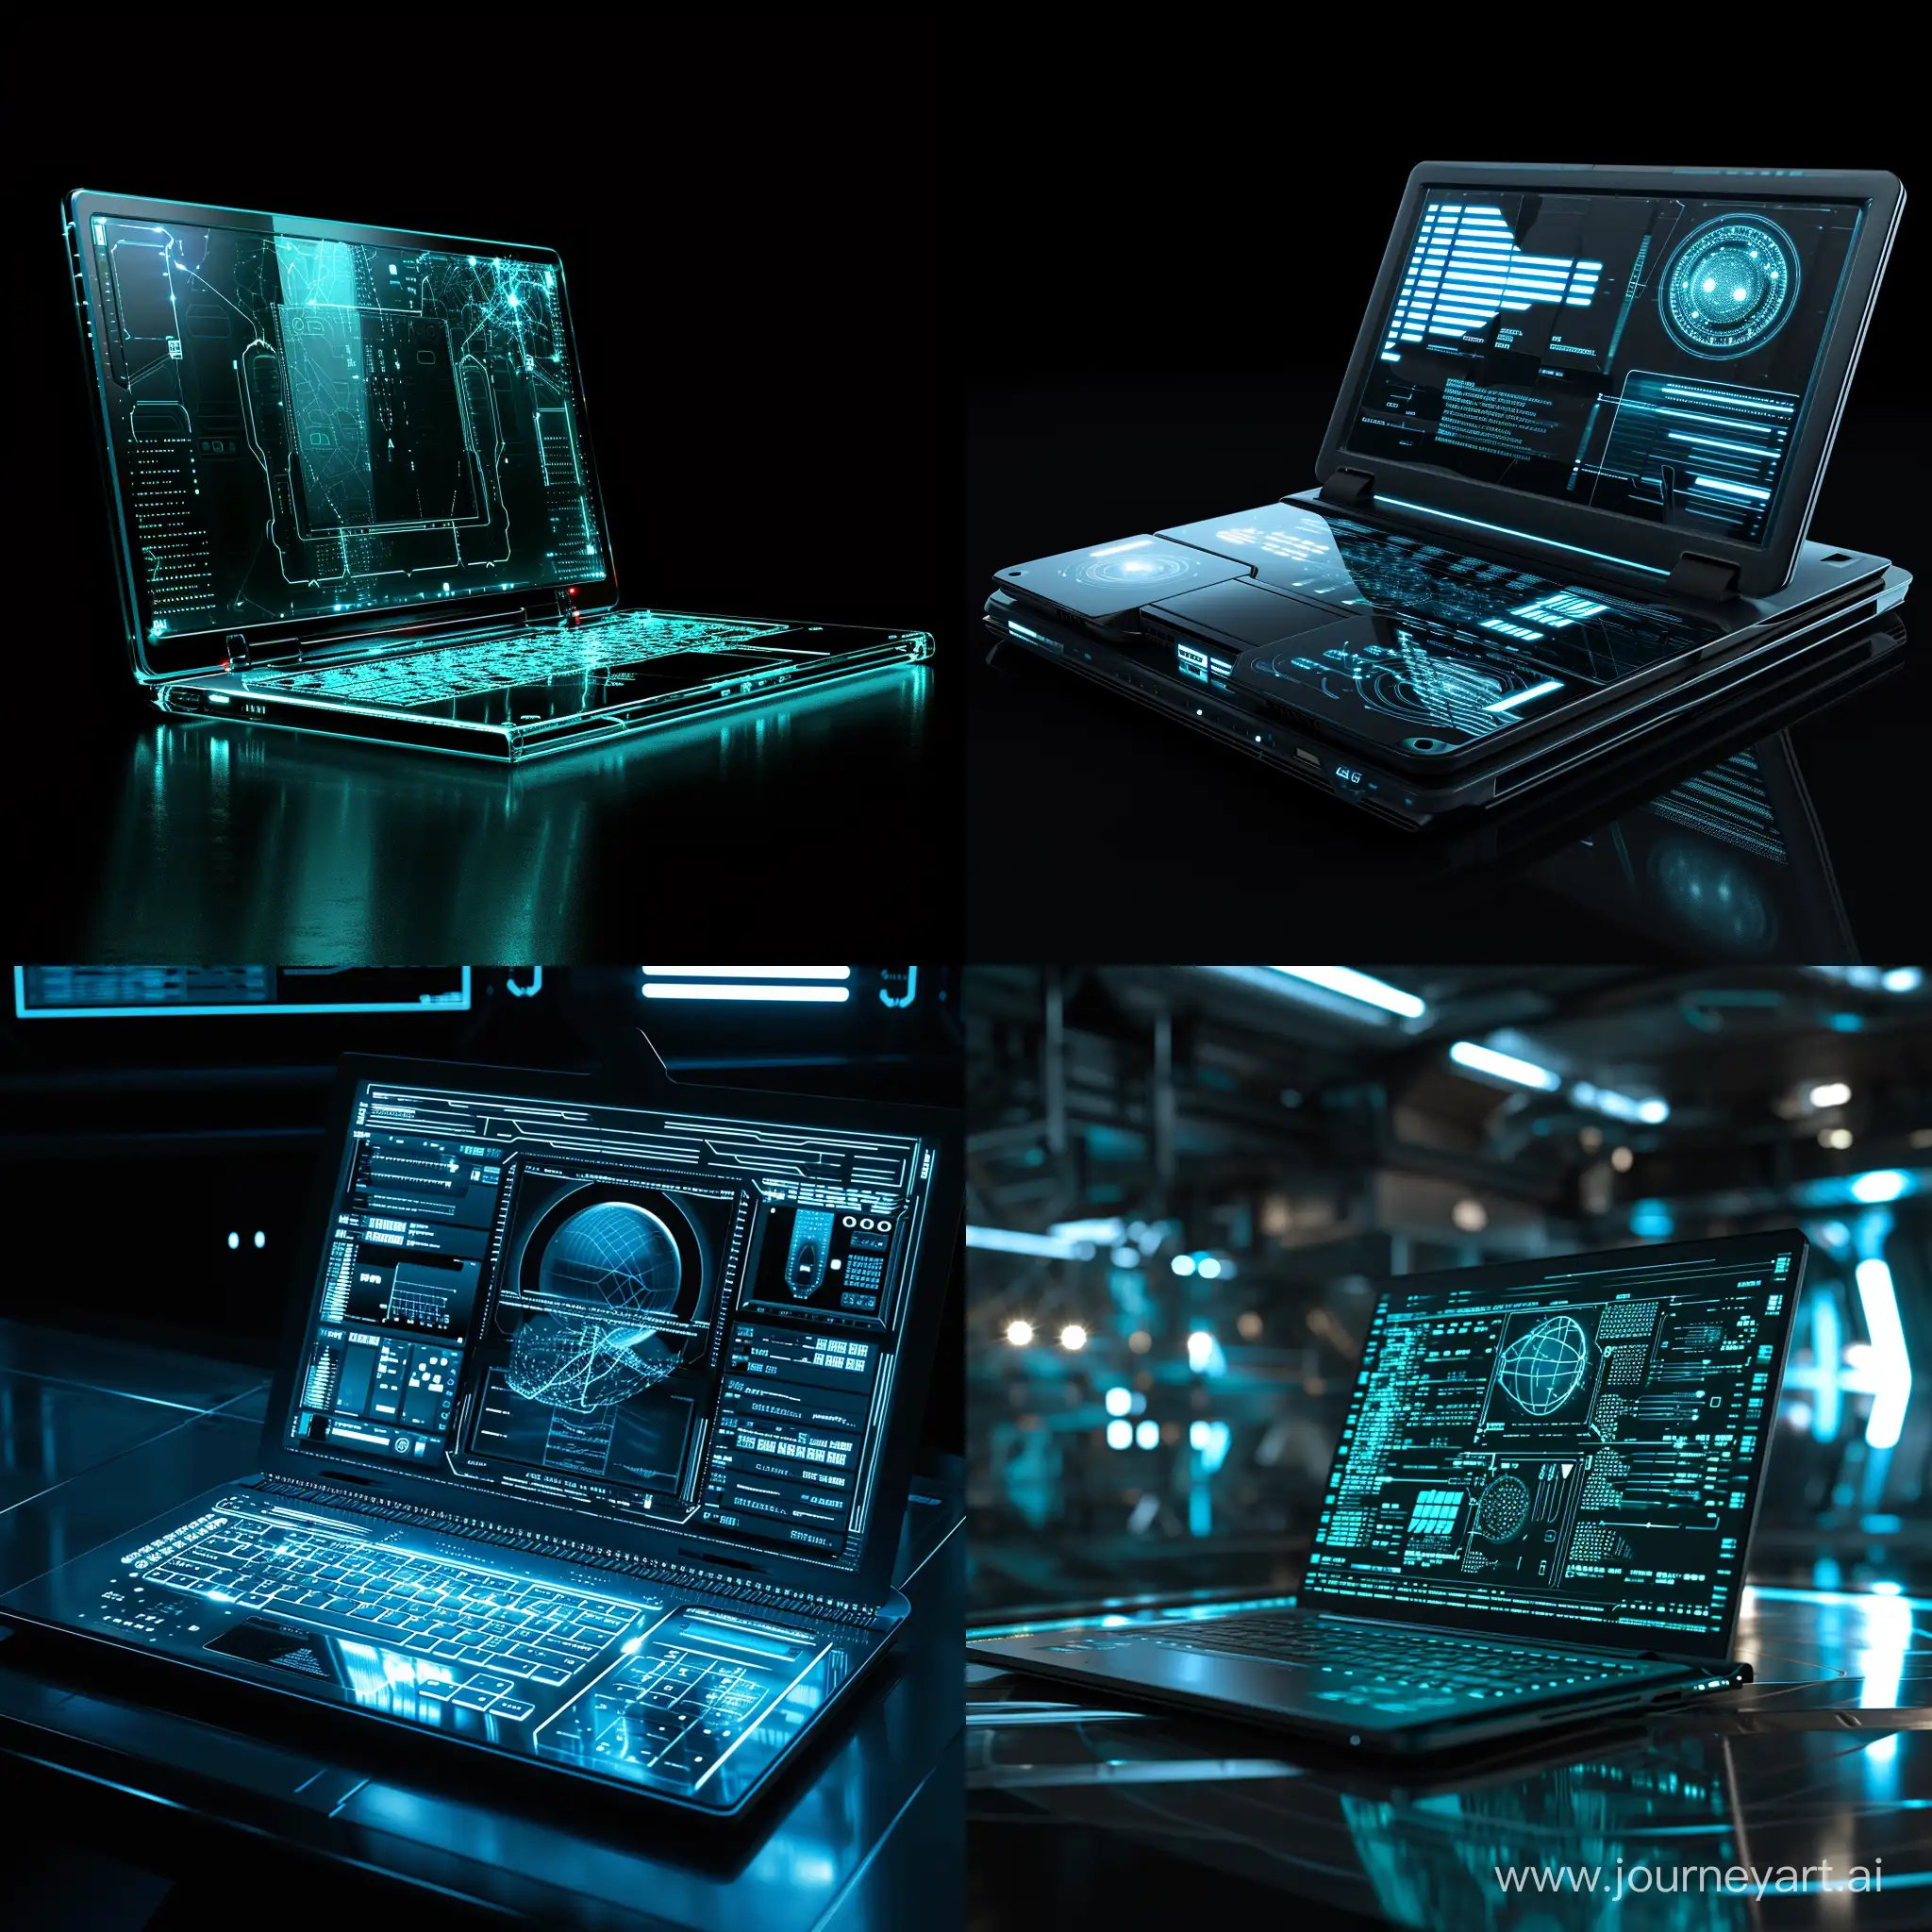 CuttingEdge-Nanotechnology-Unveiled-in-Futuristic-11-Aspect-Ratio-Laptop